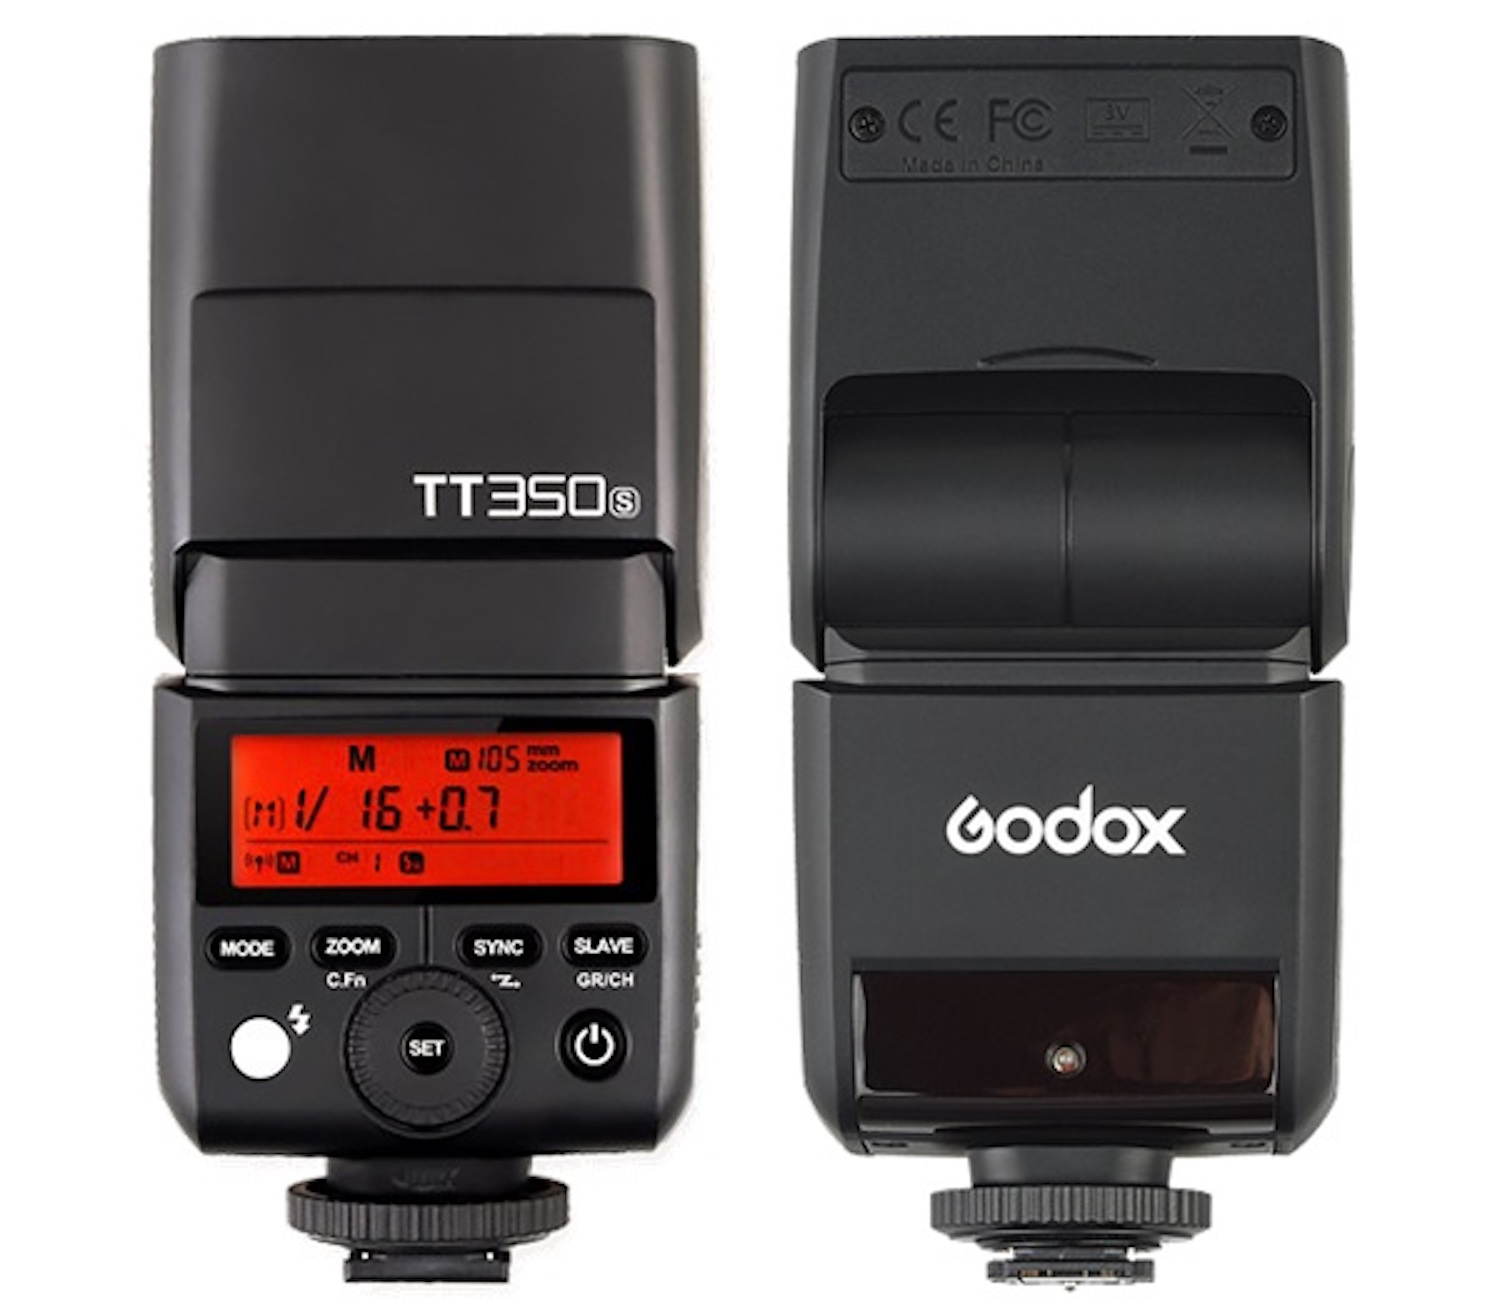 GODOX for (36, Aufsteckblitz Flash Sony & Sony TTL TTL HSS HSS) 2.4GHz für Mini